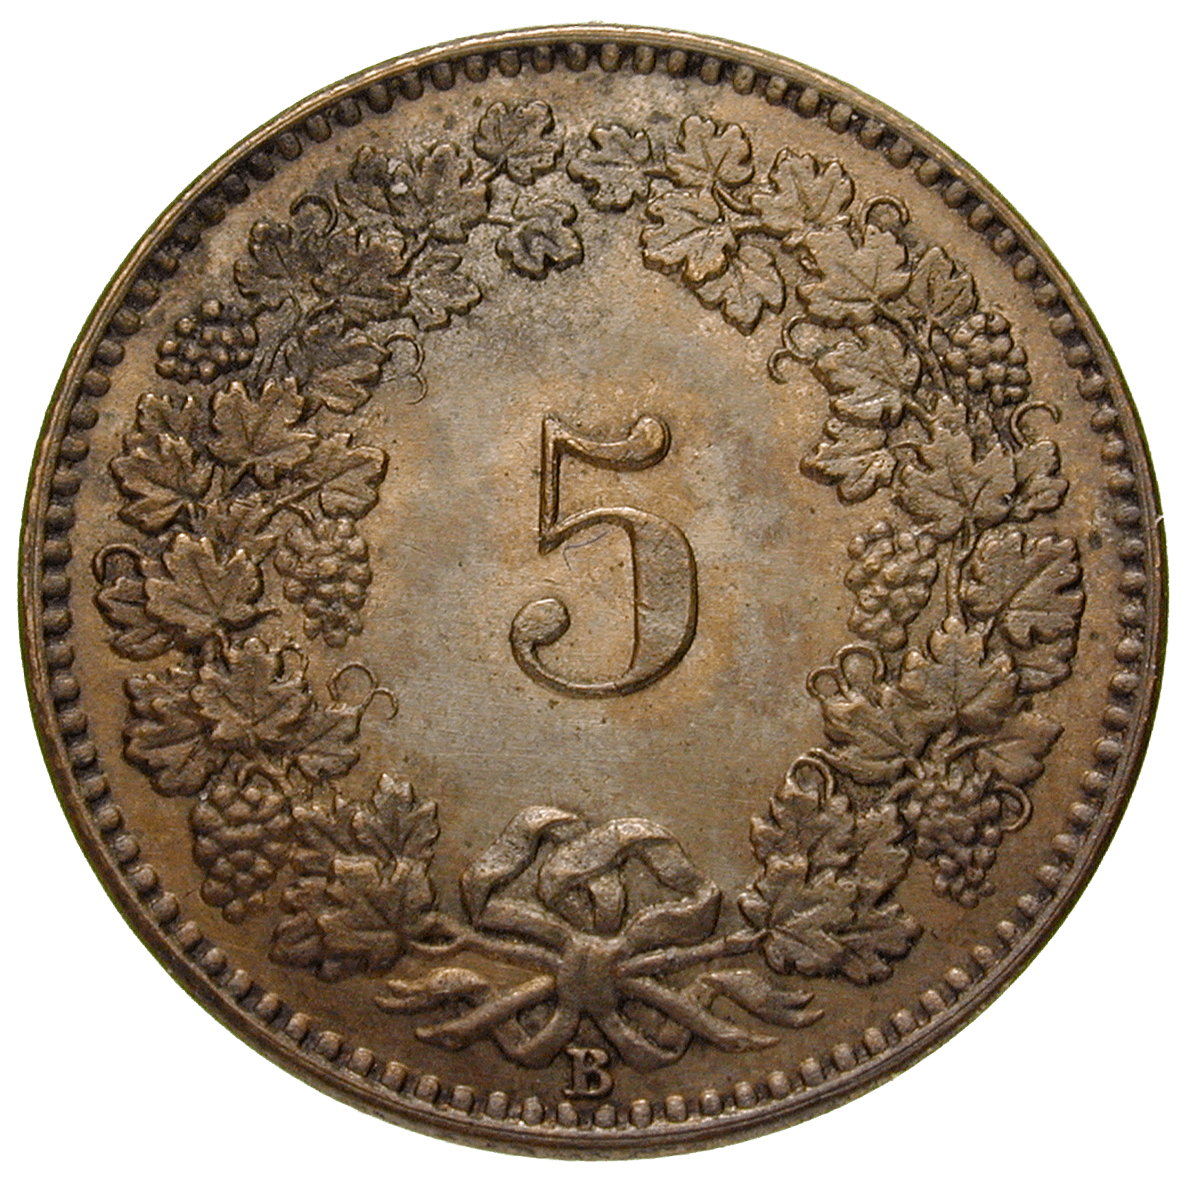 Schweizerische Eidgenossenschaft, 5 Rappen 1872 (reverse)